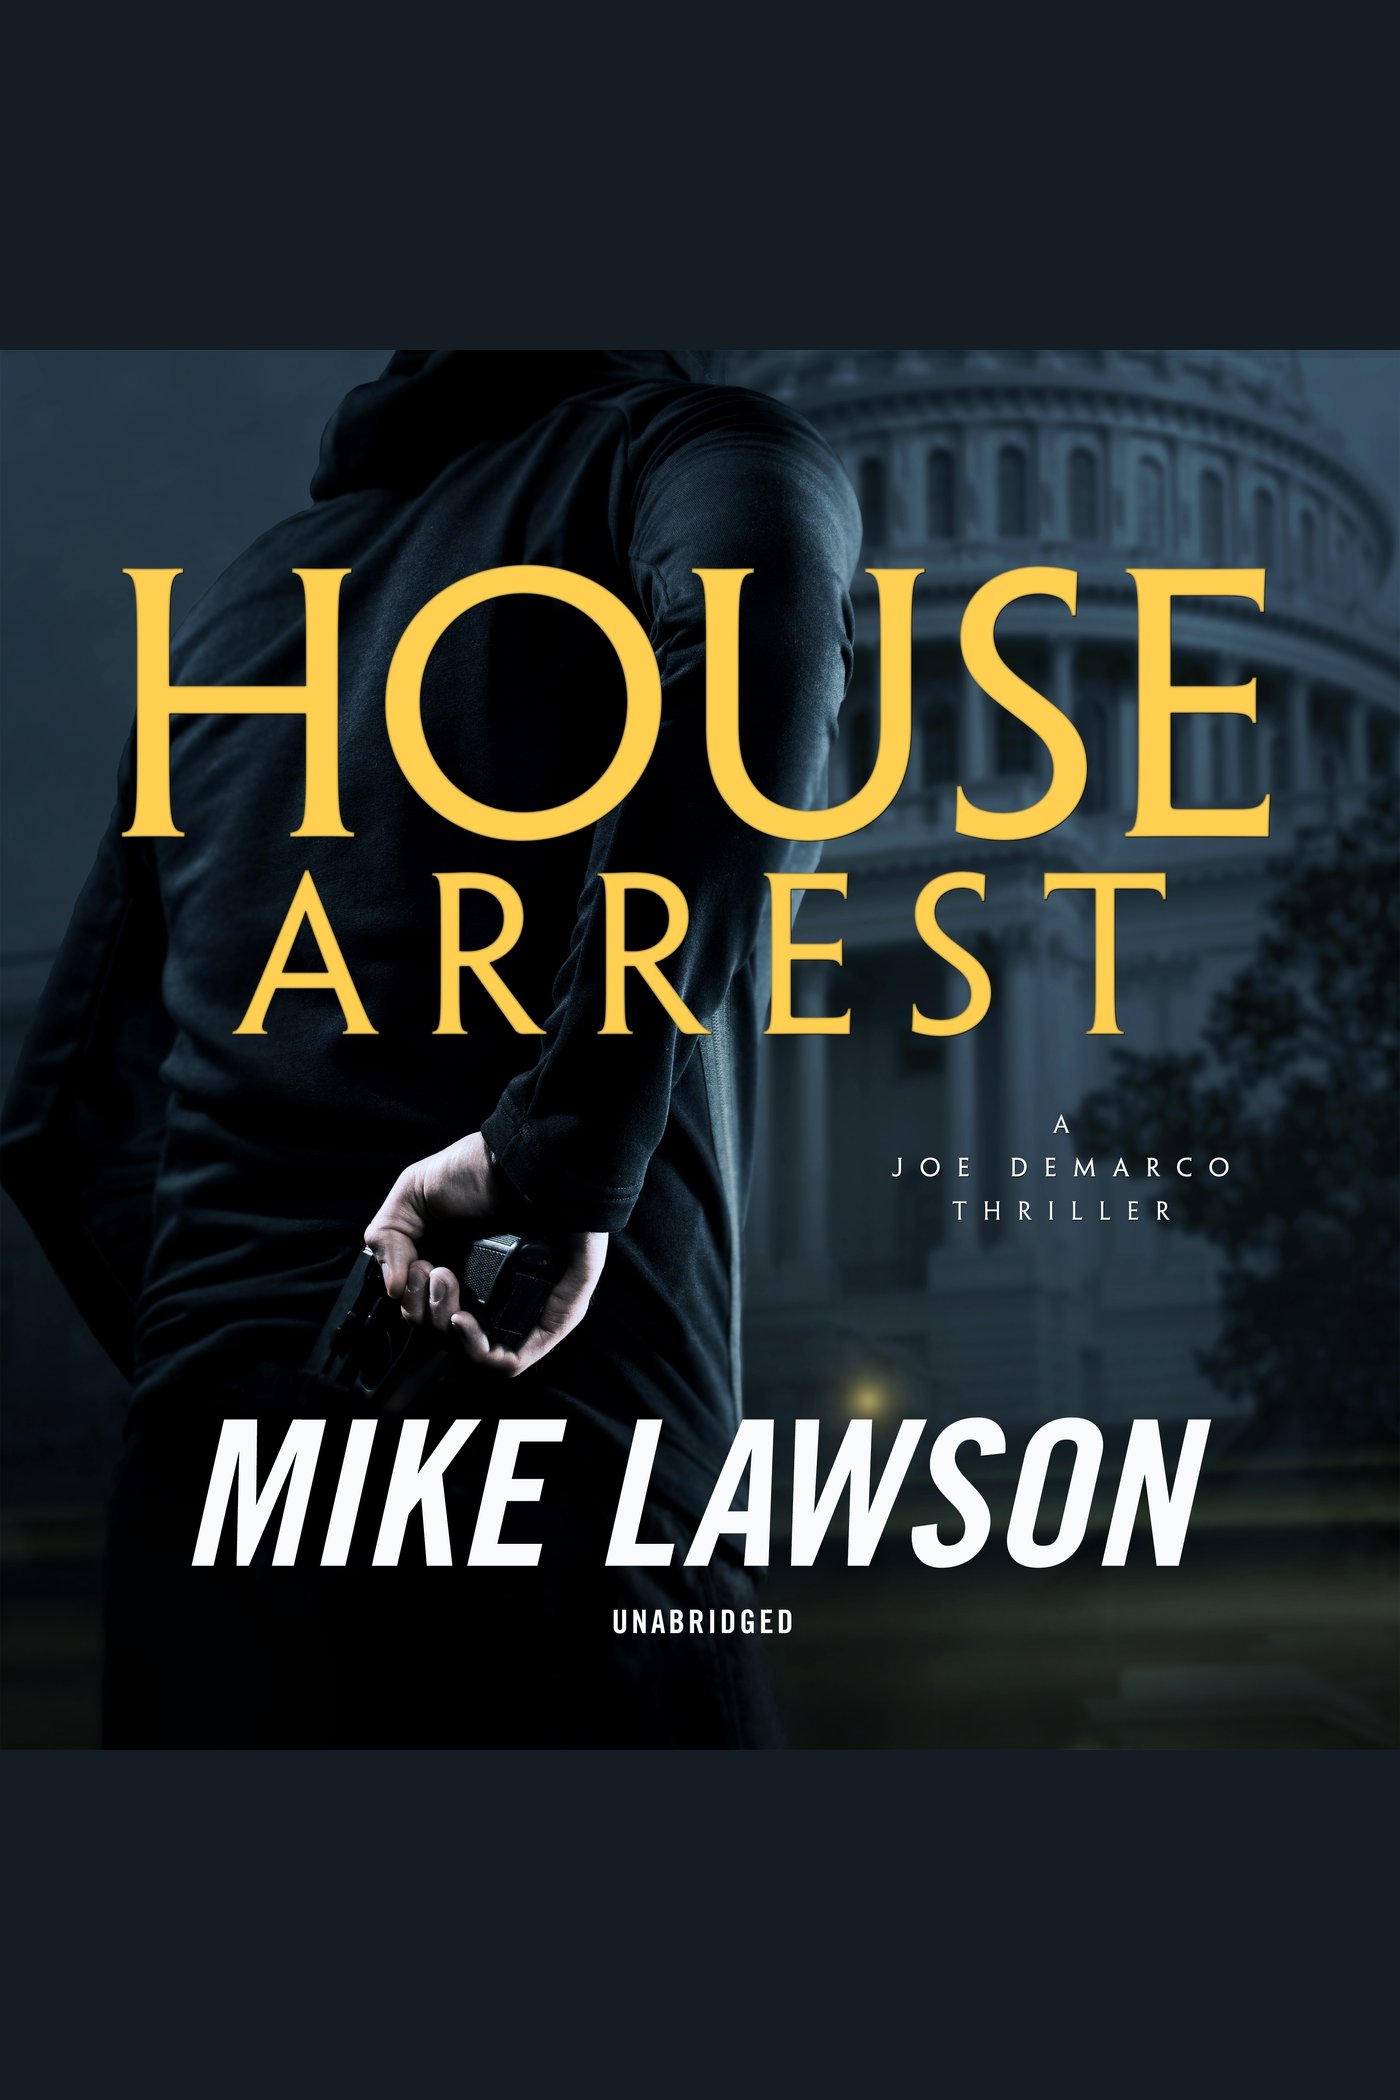 House arrest cover image